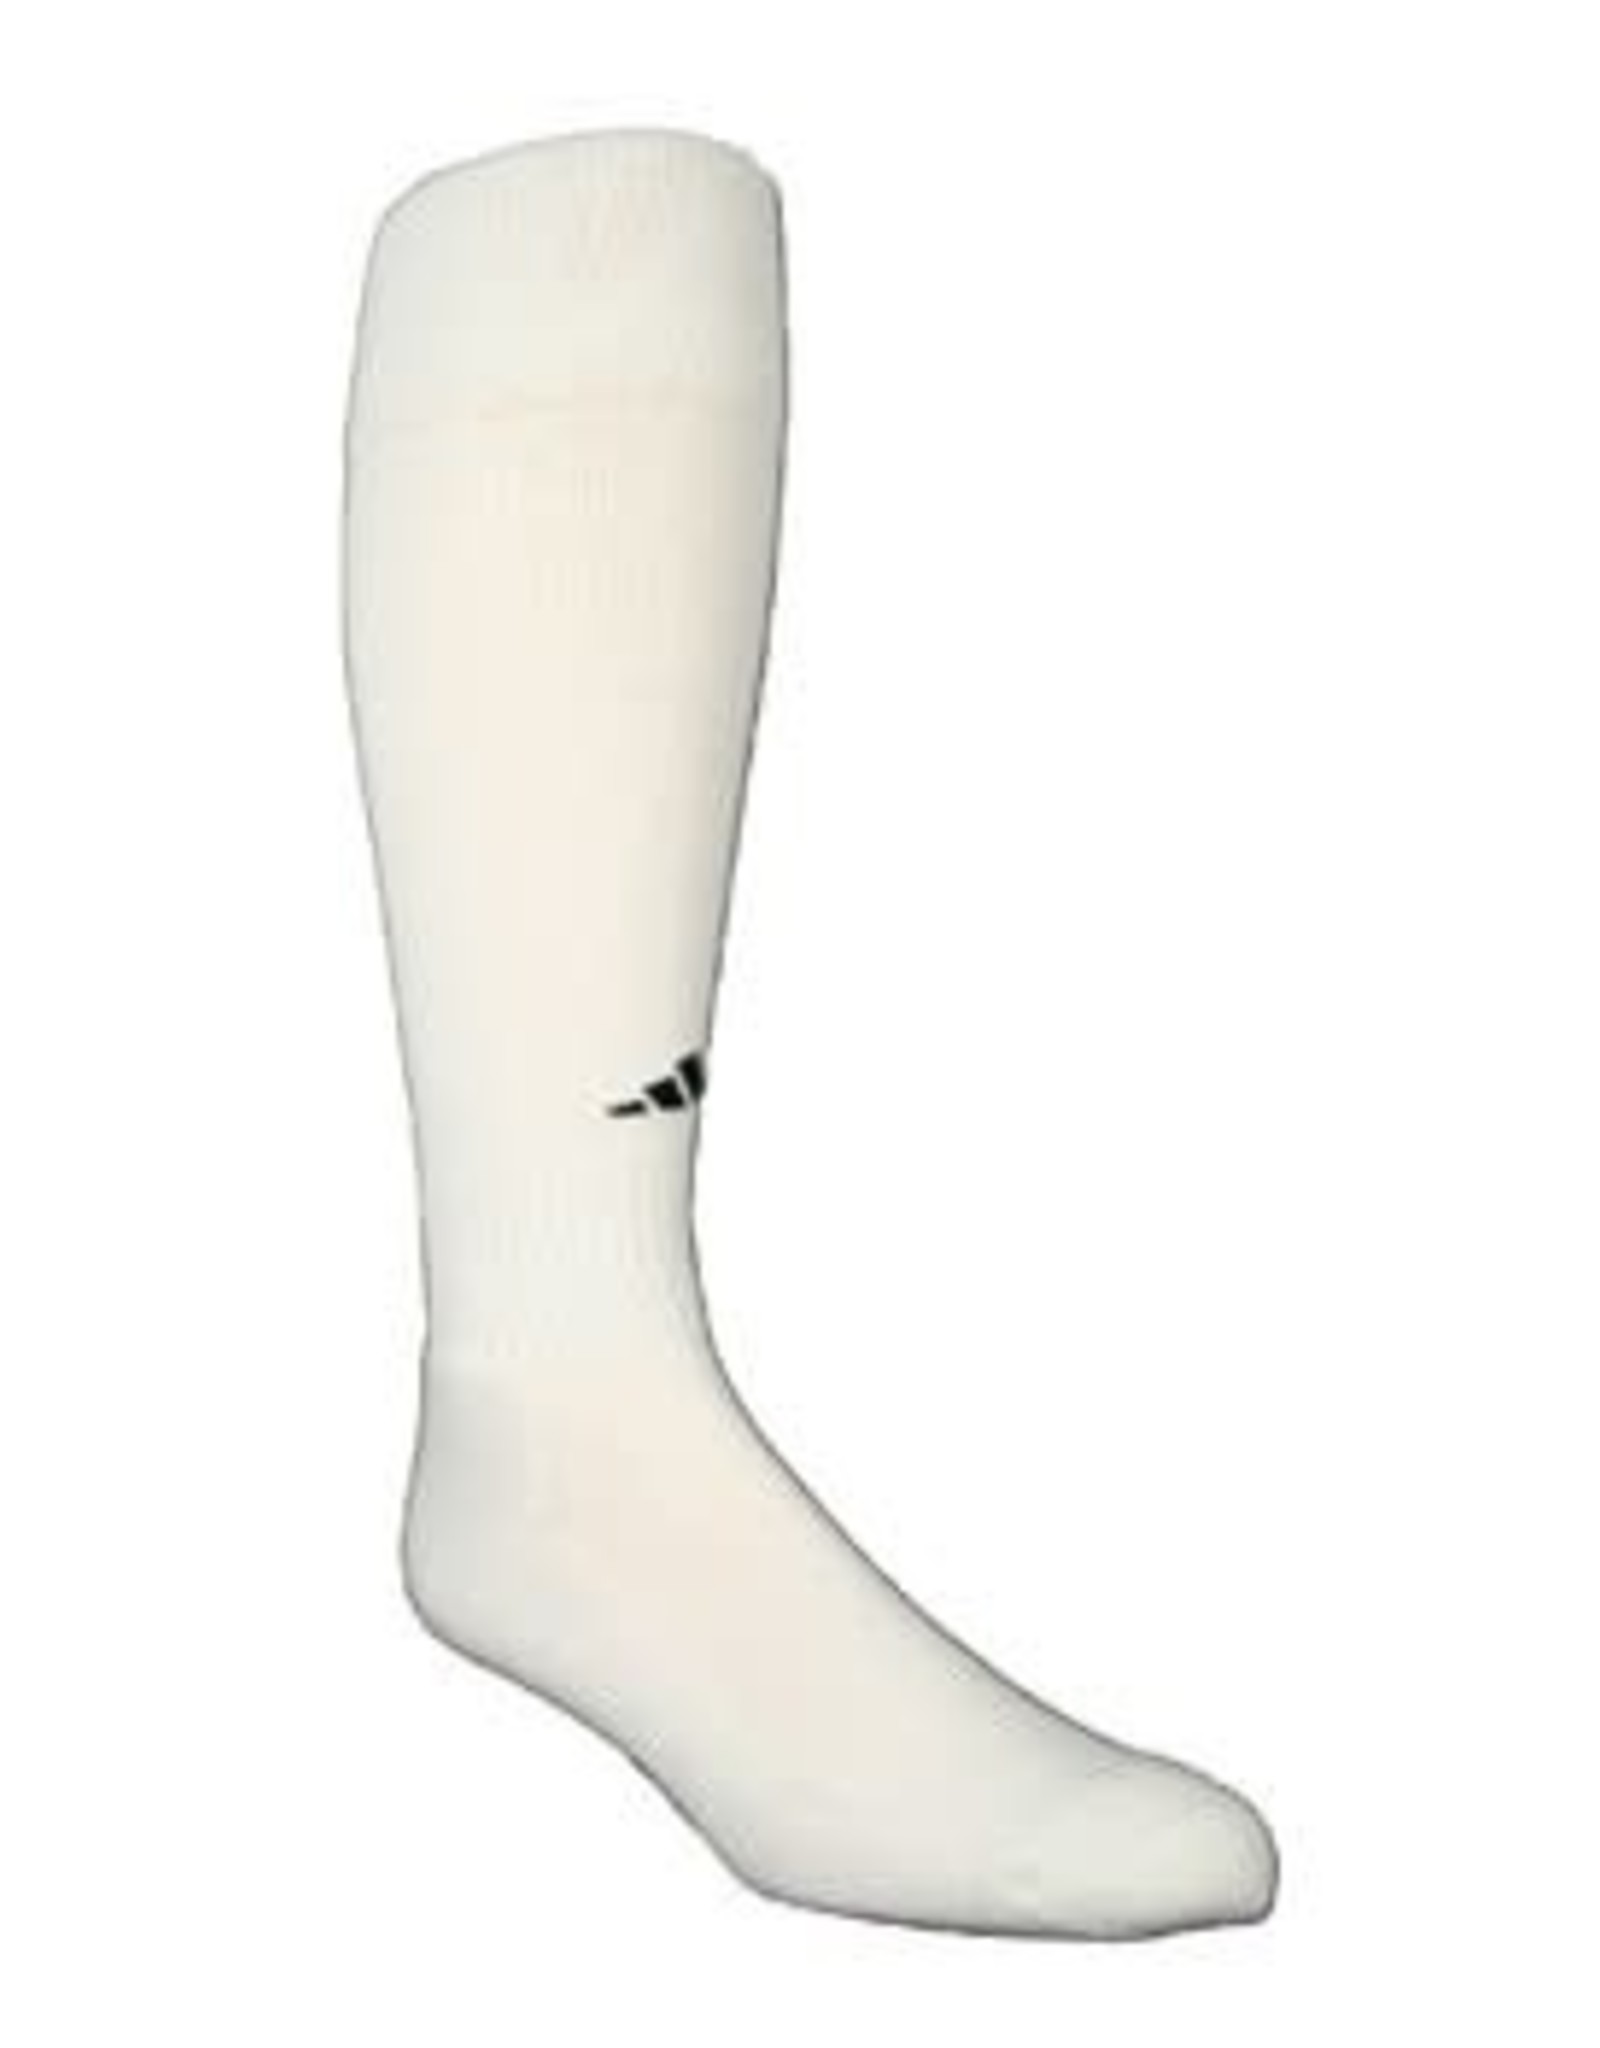 Adidas Field Sock 11